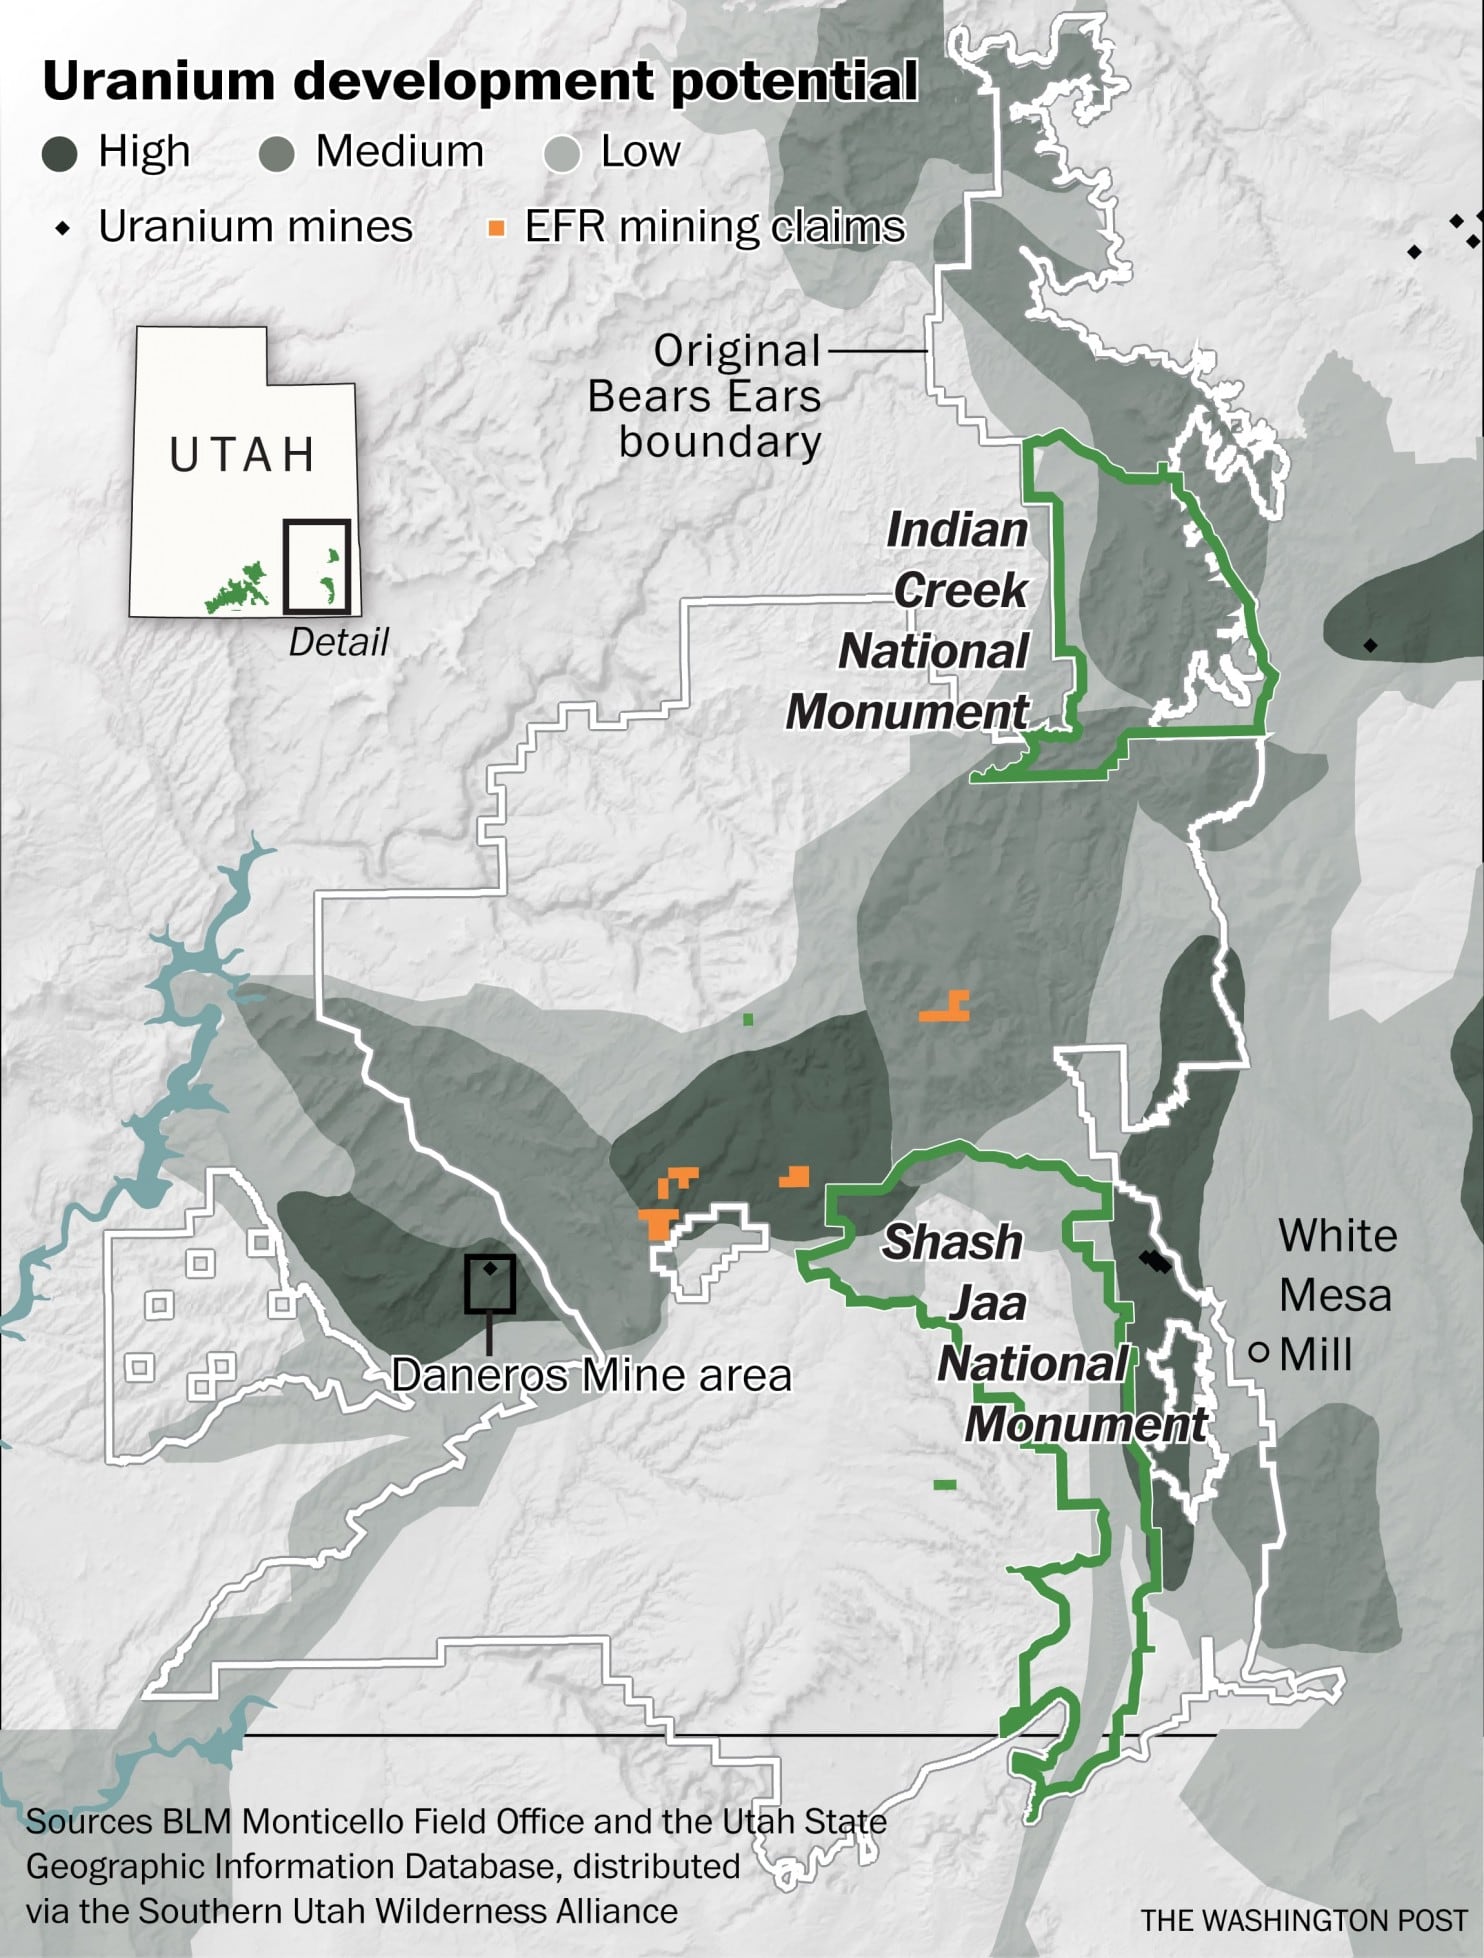 Map of Uranium development potential in Bears Ears area, Washington Post